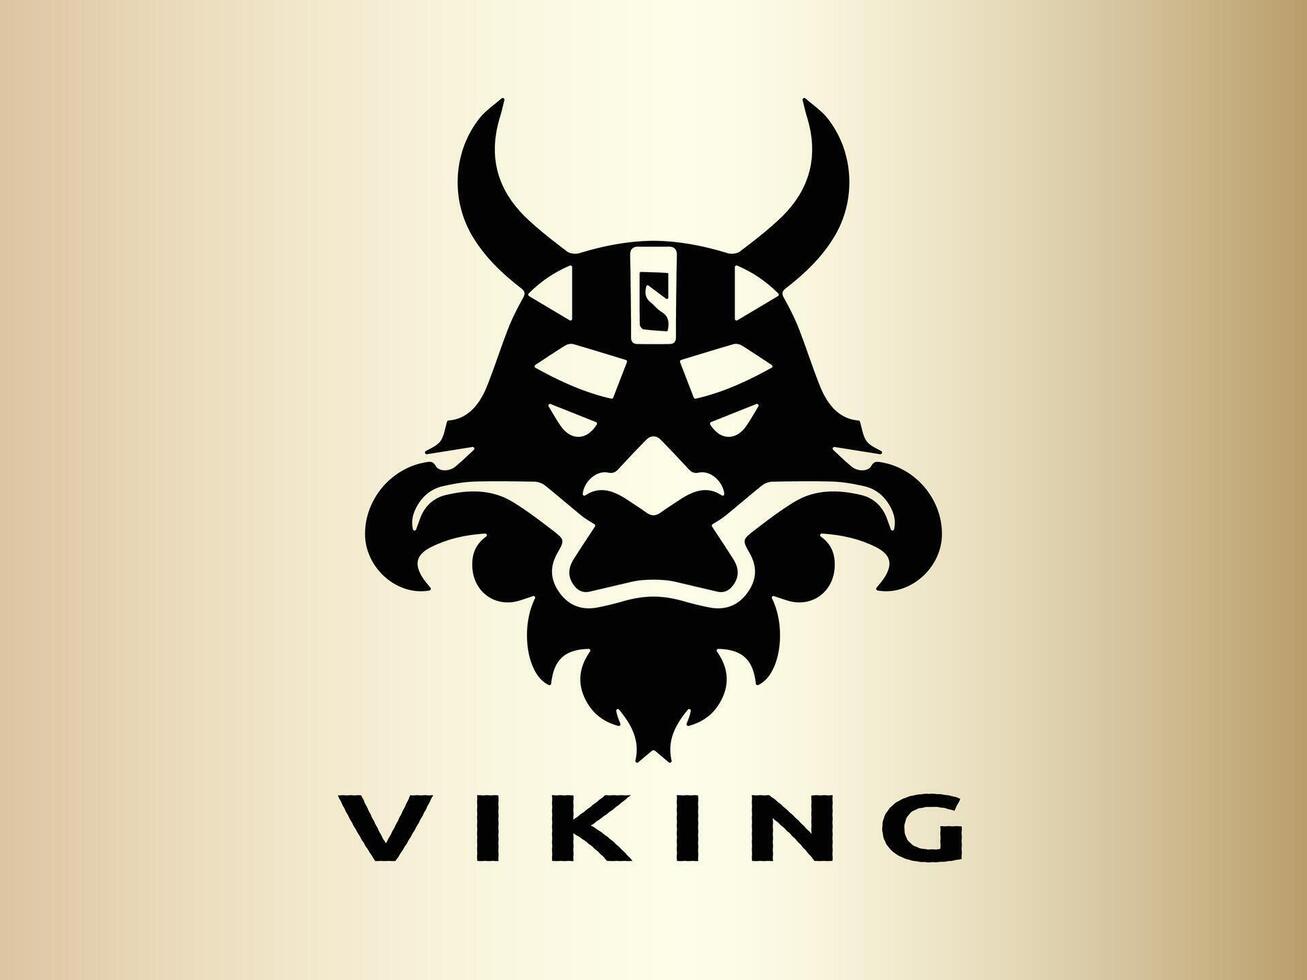 vikingo logo diseño vector modelo. humano vikingo logo diseño icono símbolo vector ilustración.